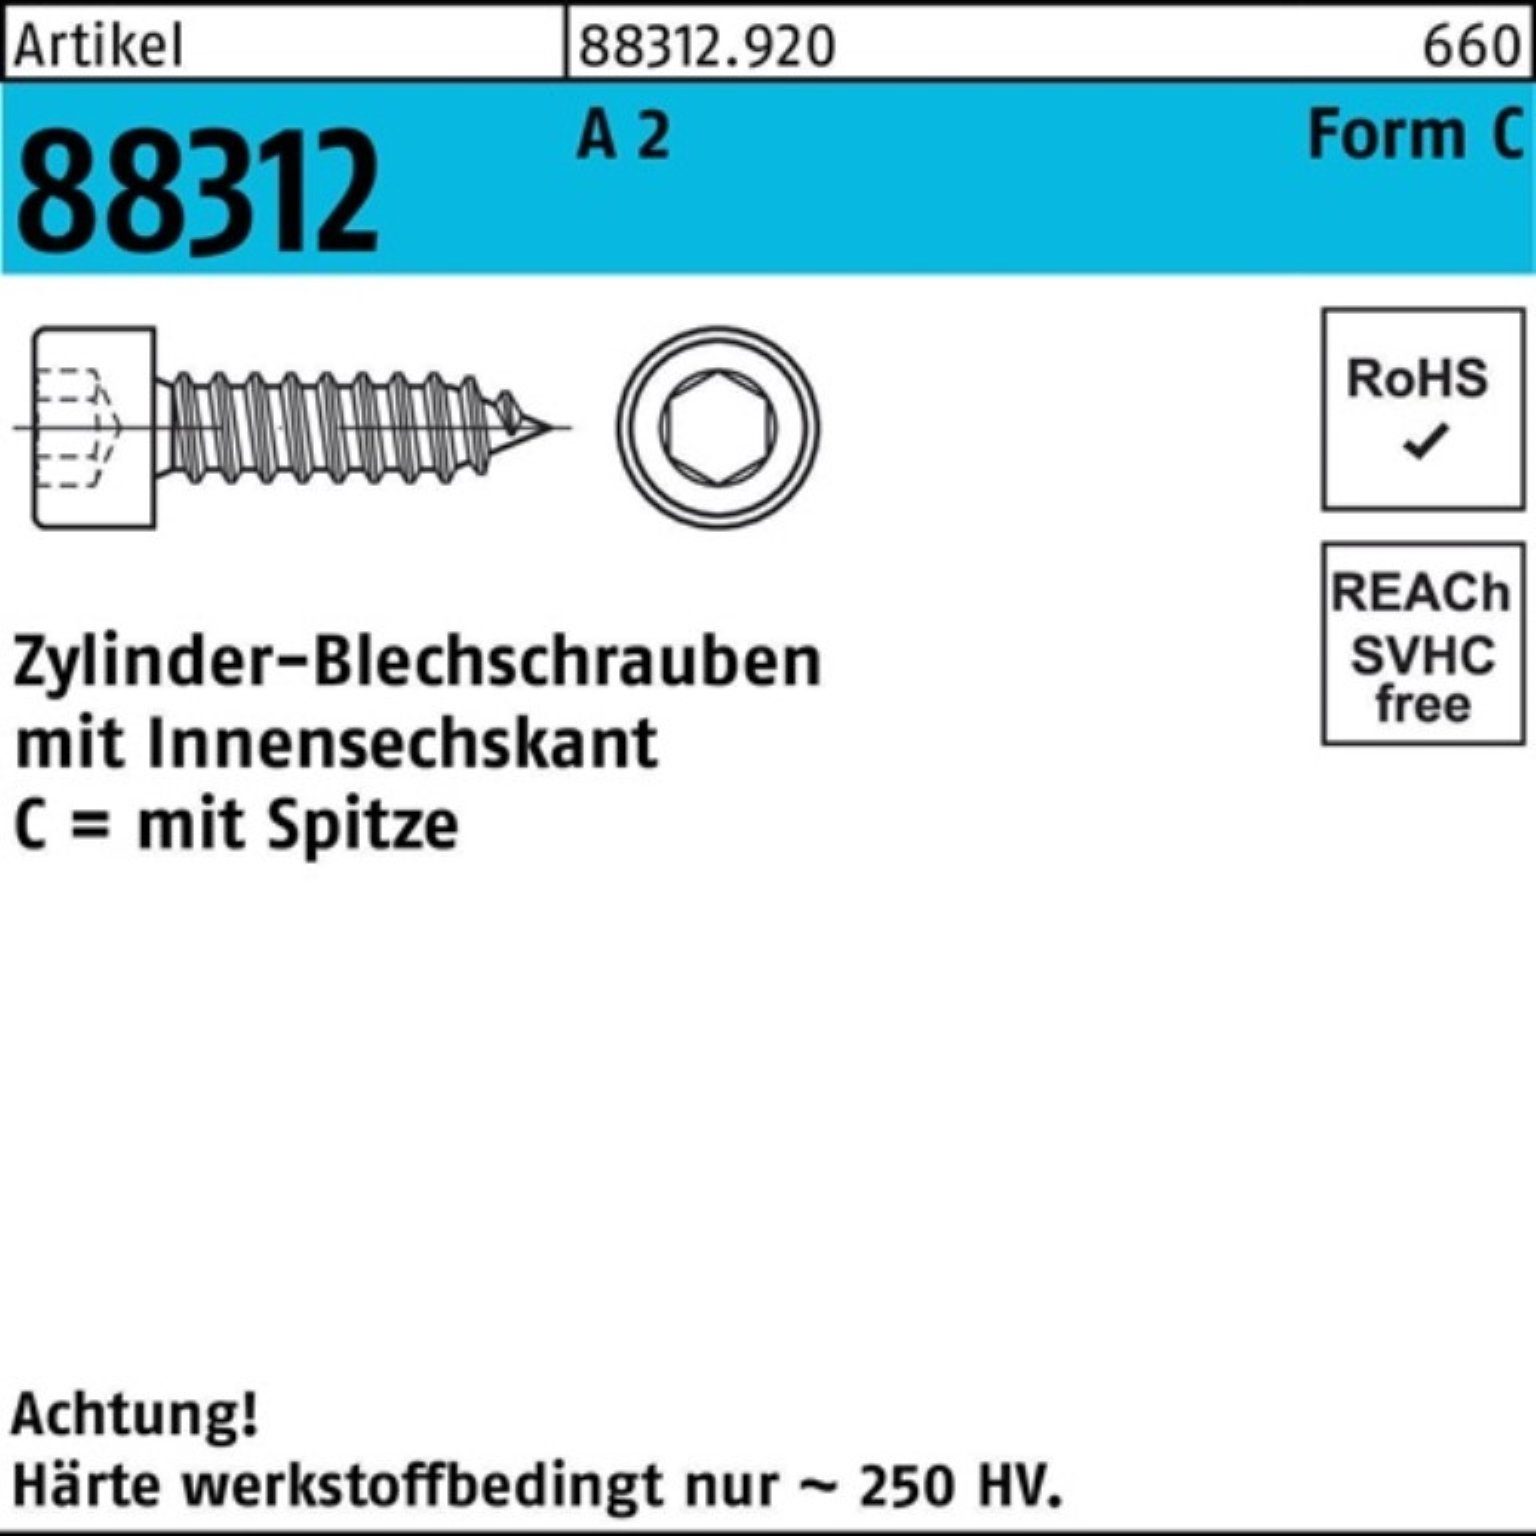 4,8x Blechschraube R Pack C Reyher 88312 Spitze/Innen-6kt A 200er 70 Zylinderblechschraube